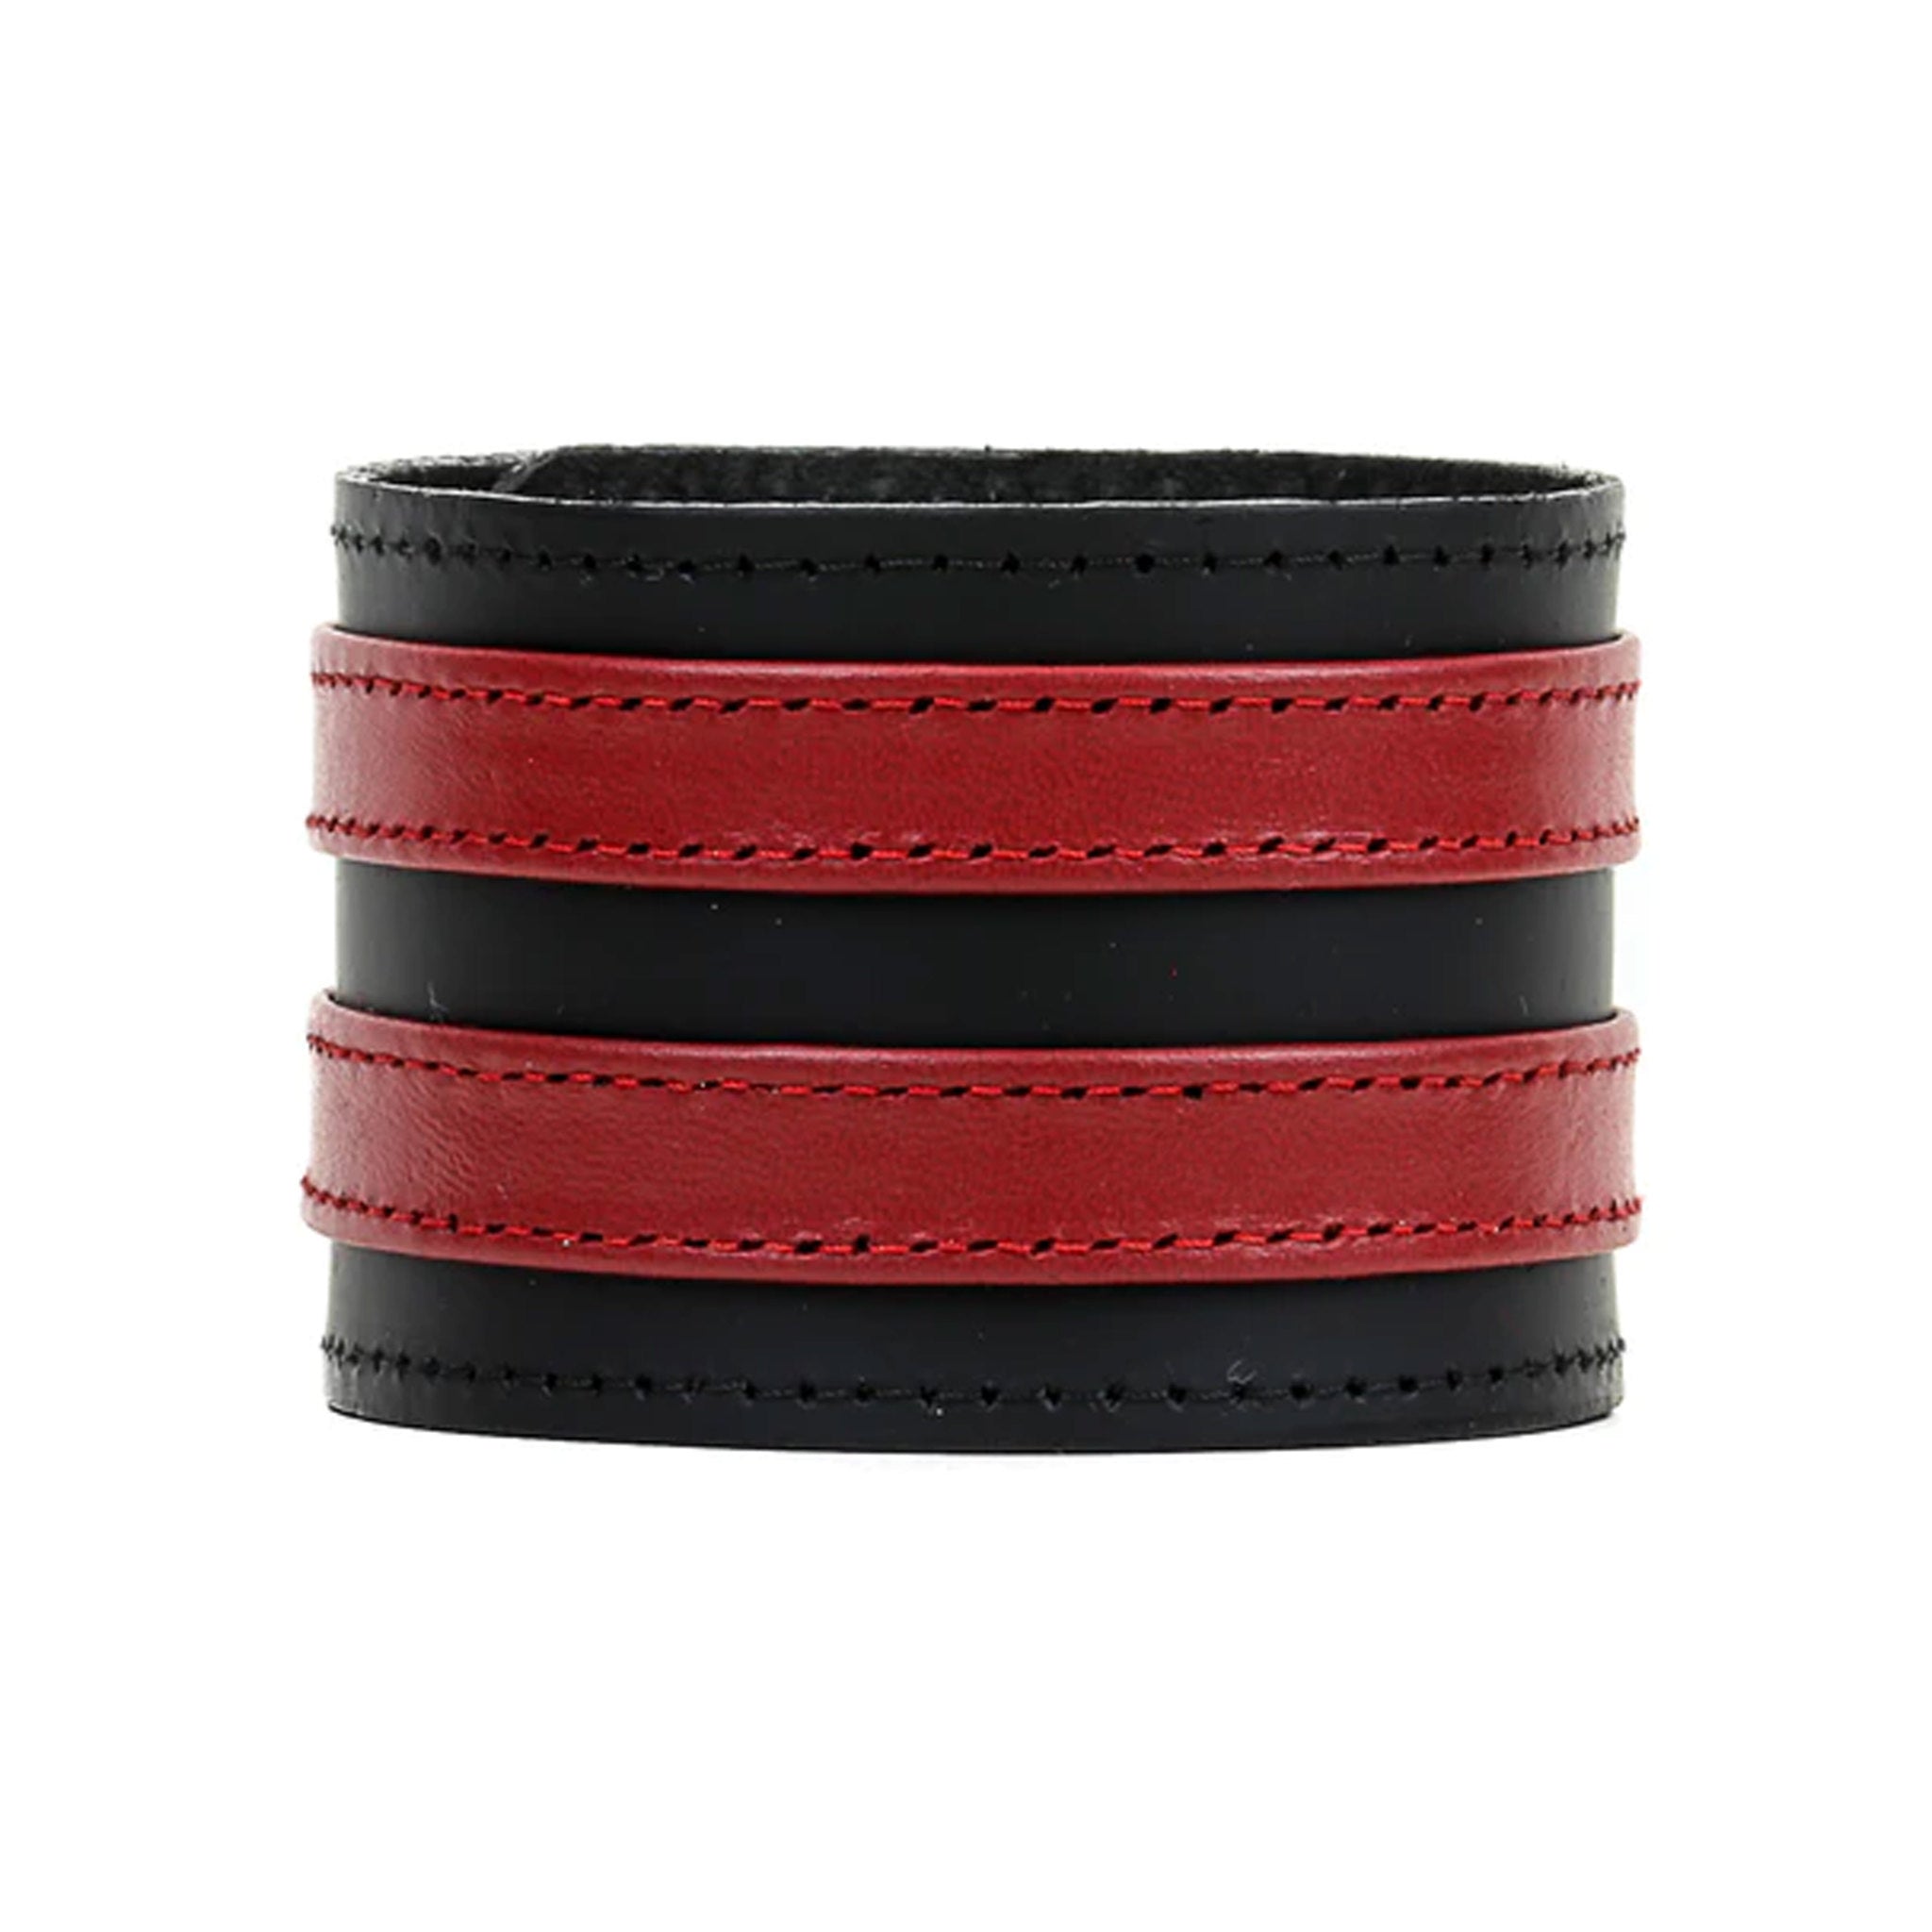 2 Leather Stripes Snap Wrist Cuff Bracelet